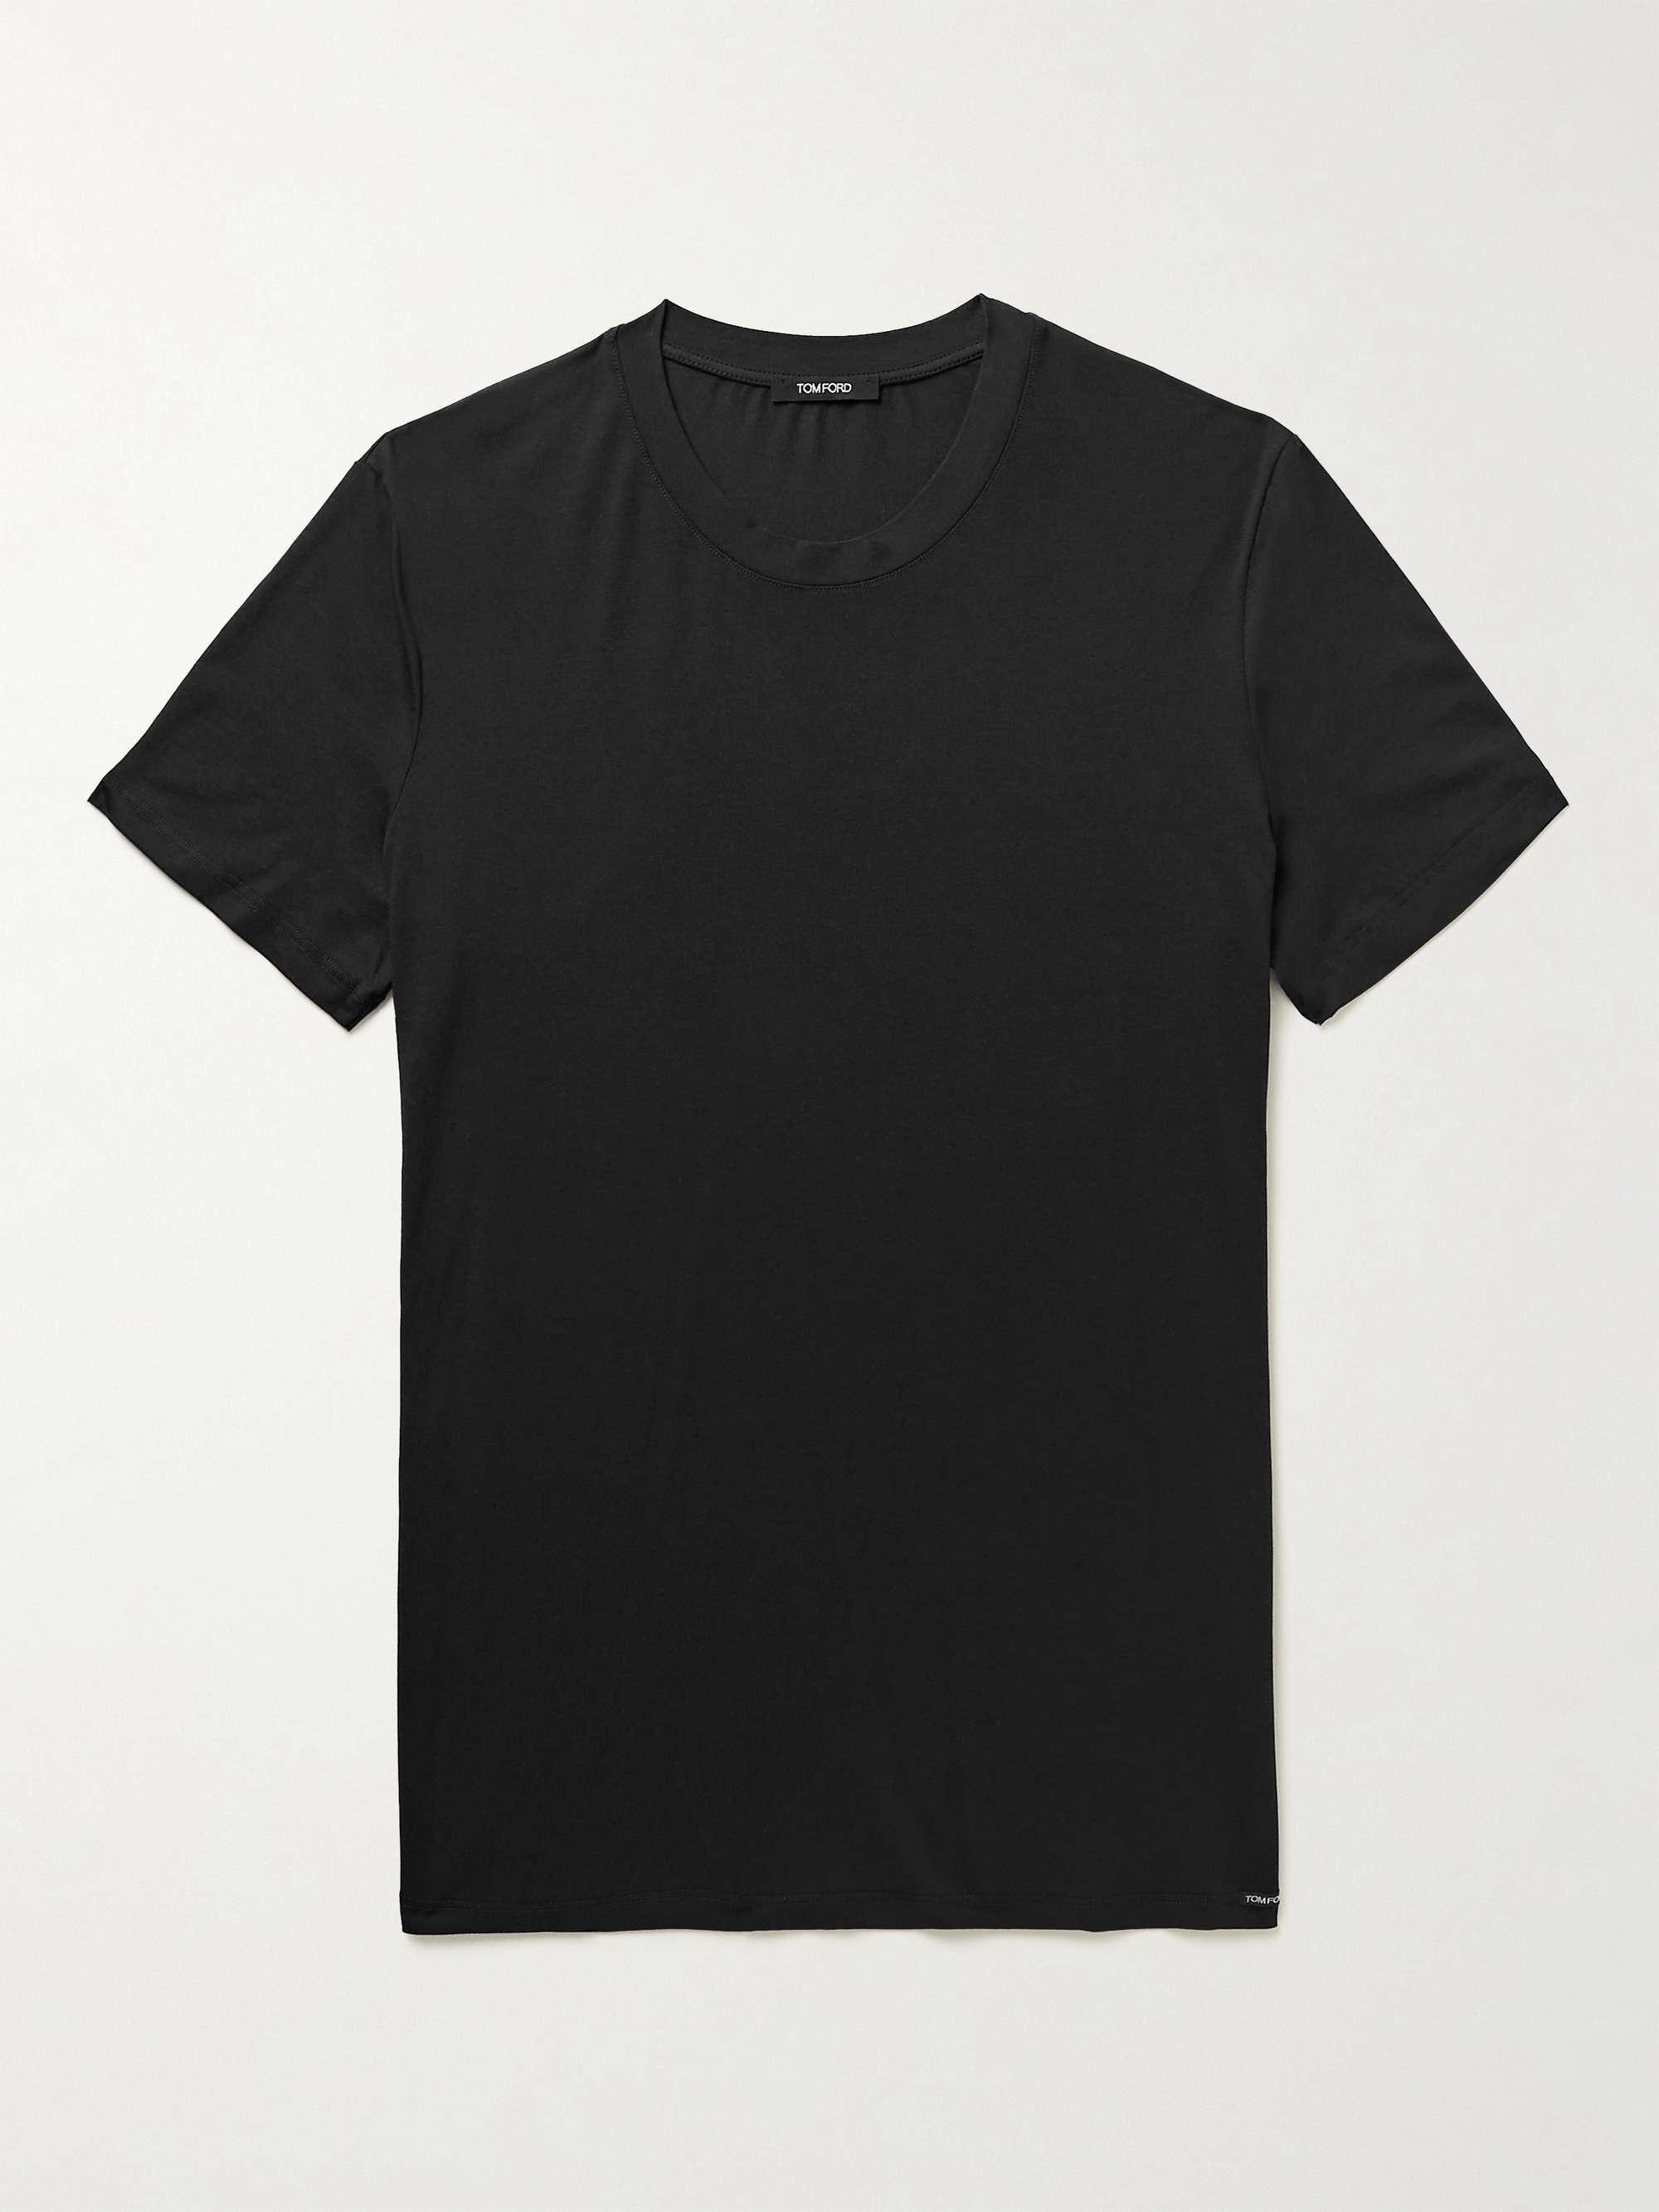 TOM FORD Stretch Cotton and Modal-Blend T-Shirt for Men | MR PORTER